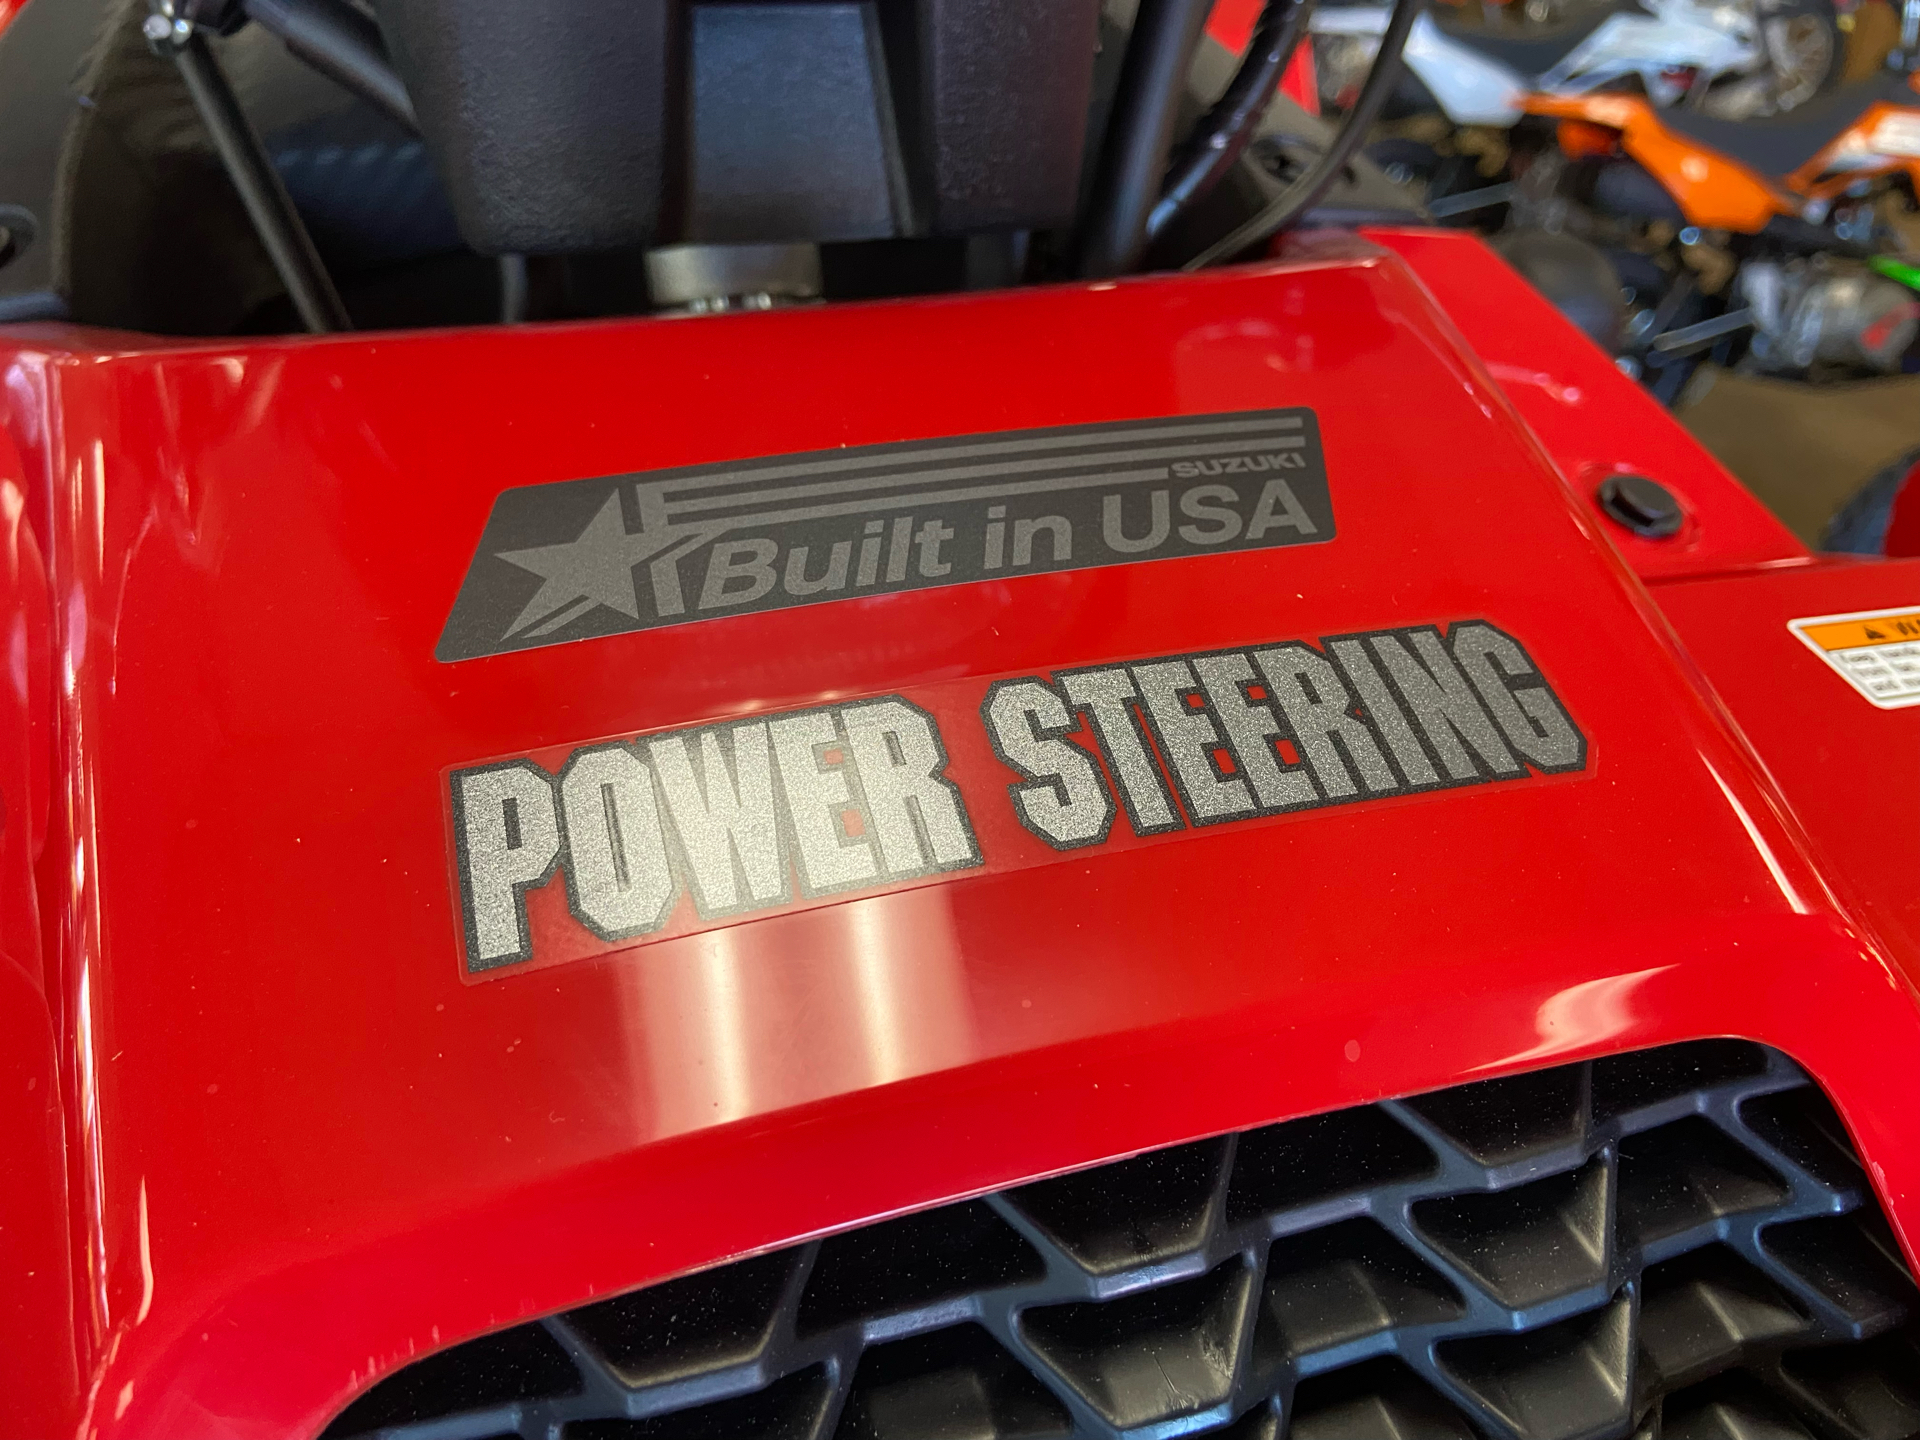 2022 Suzuki KingQuad 500AXi Power Steering in Sanford, North Carolina - Photo 10